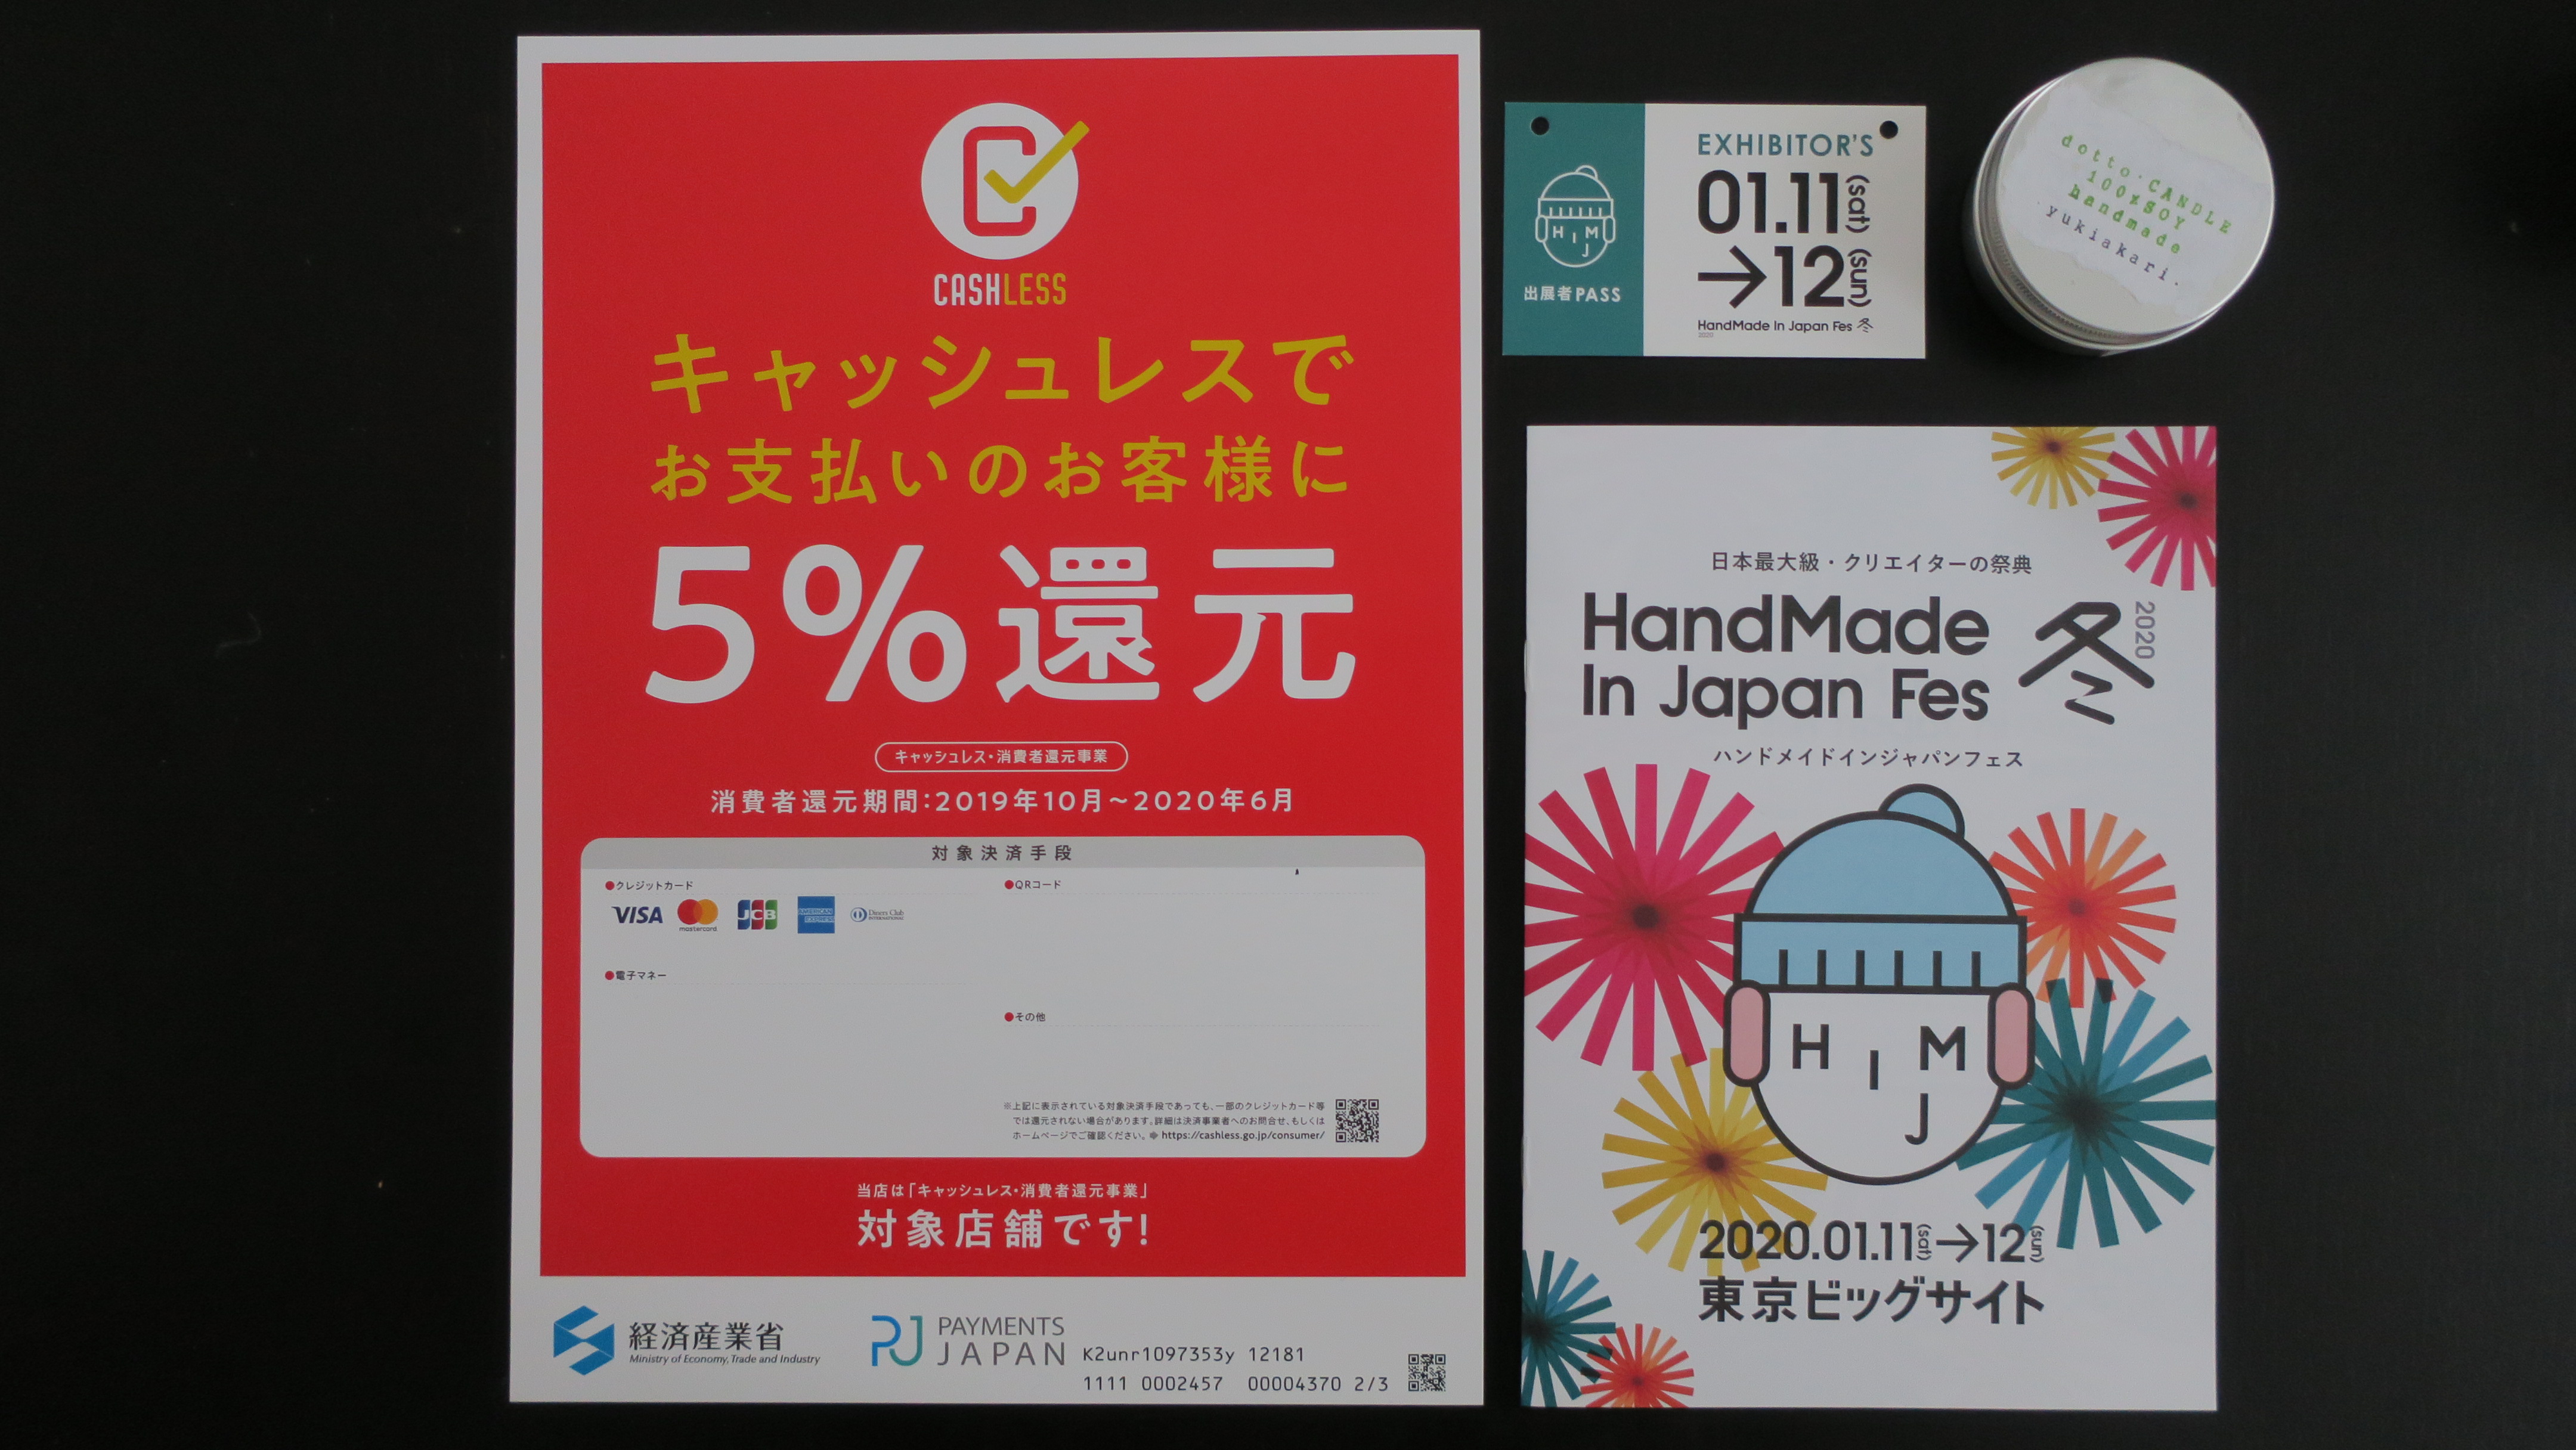 『HandMade in Japan Fes 冬 2020』 に参加します